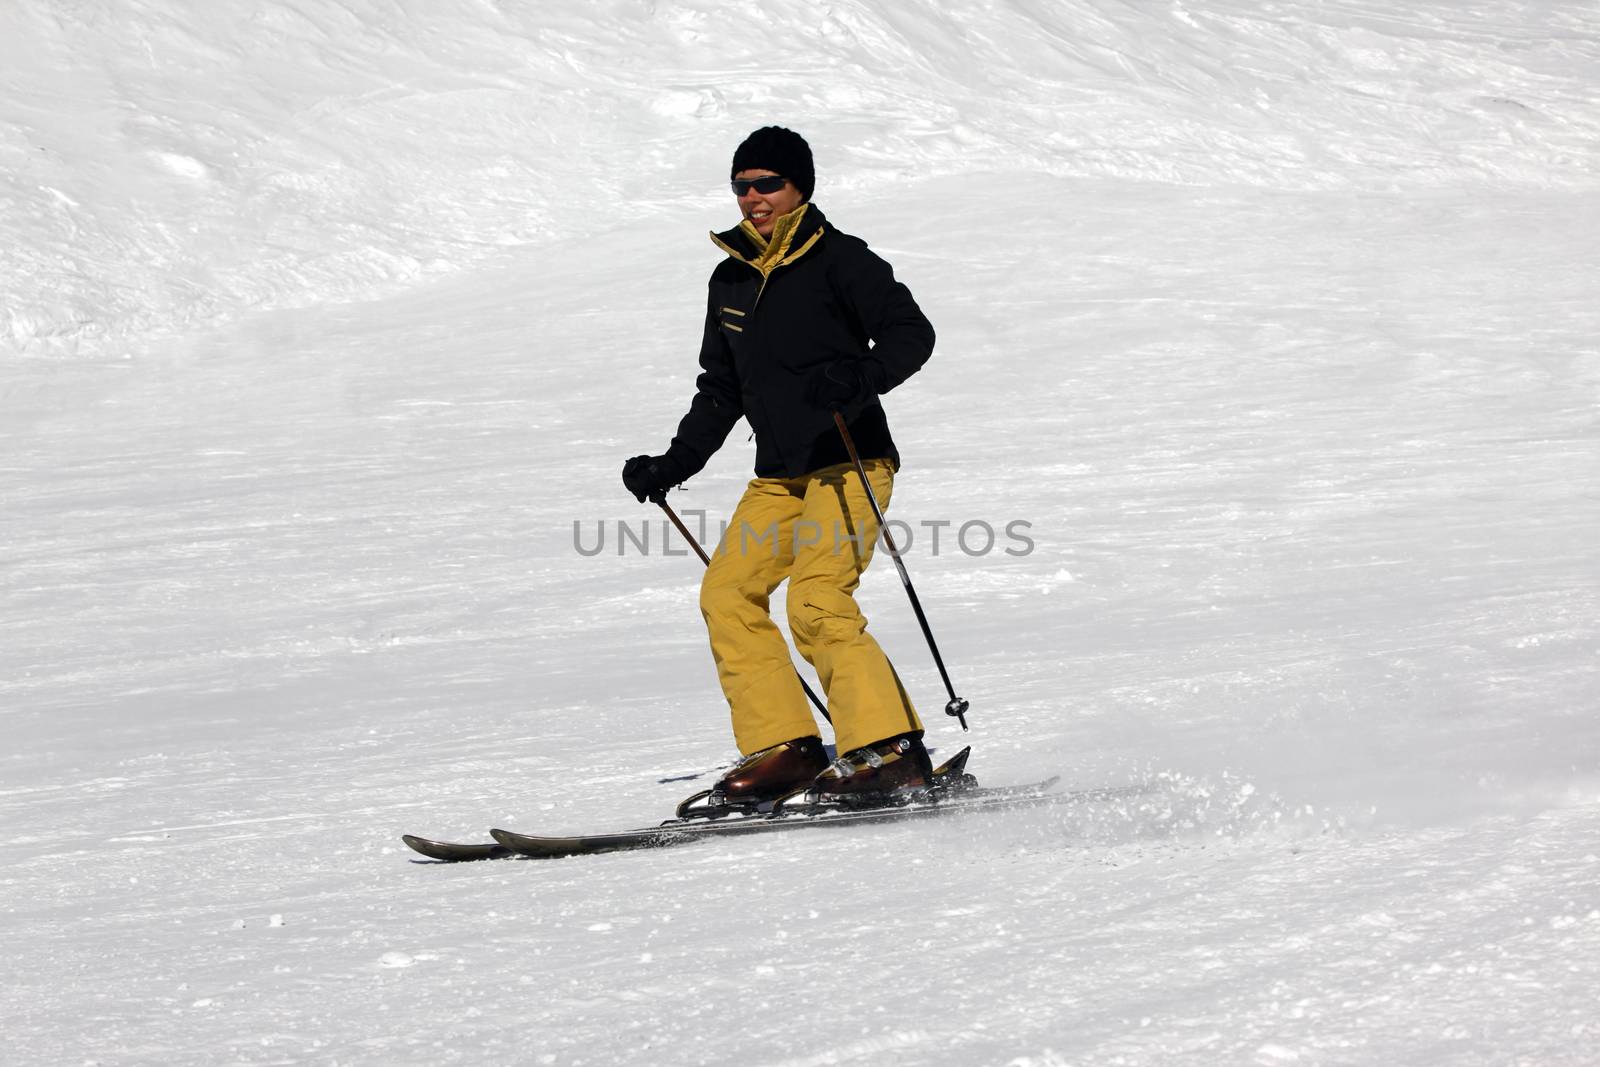 Skier riding fresh powder snow. Europe. Russia. Caucasus.